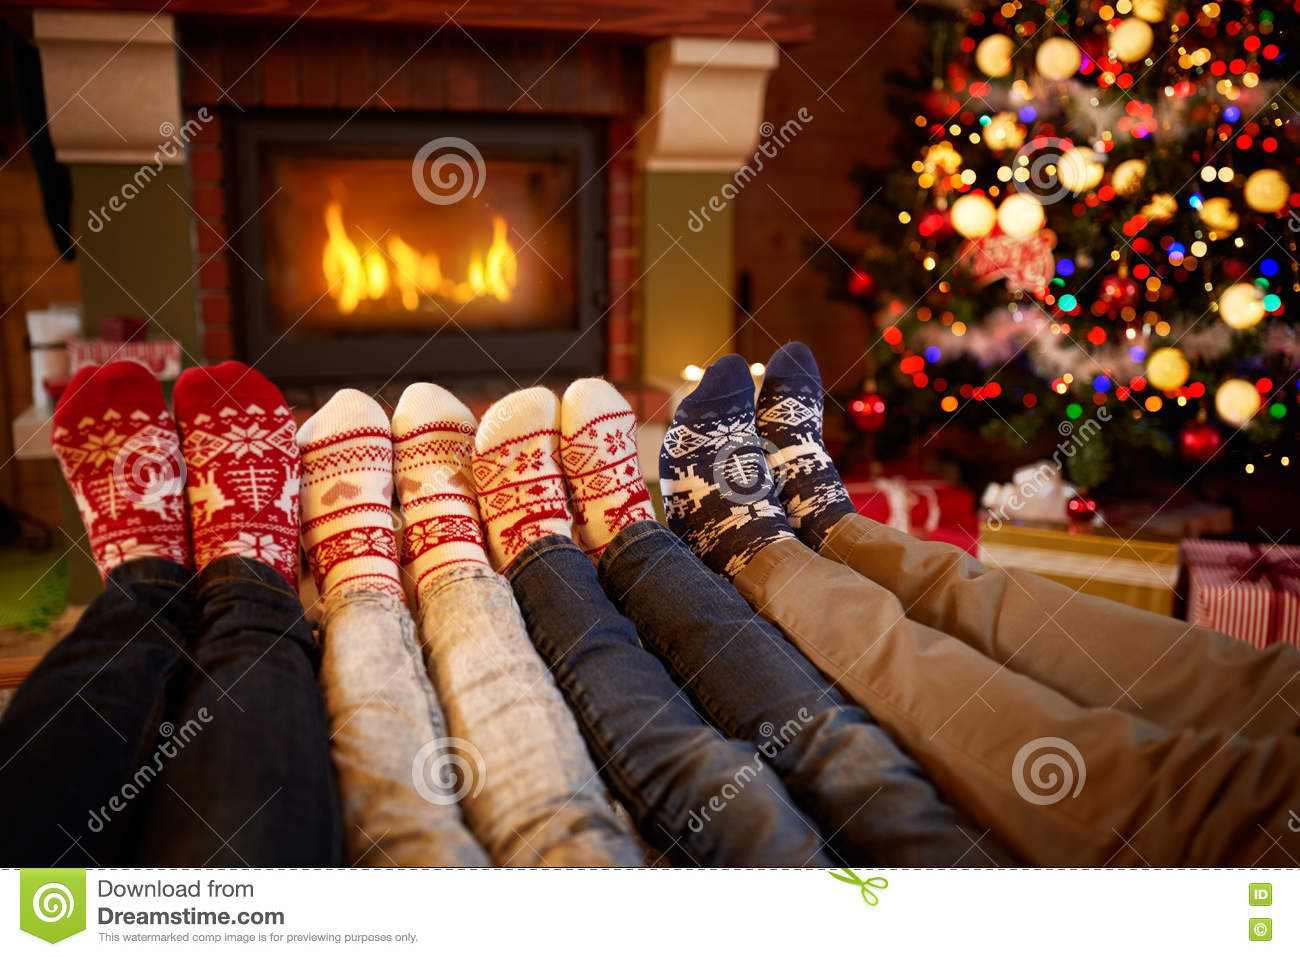 Christmas Sock Fireplace
 Feet In Wool Socks Near Fireplace In Christmas Time Stock